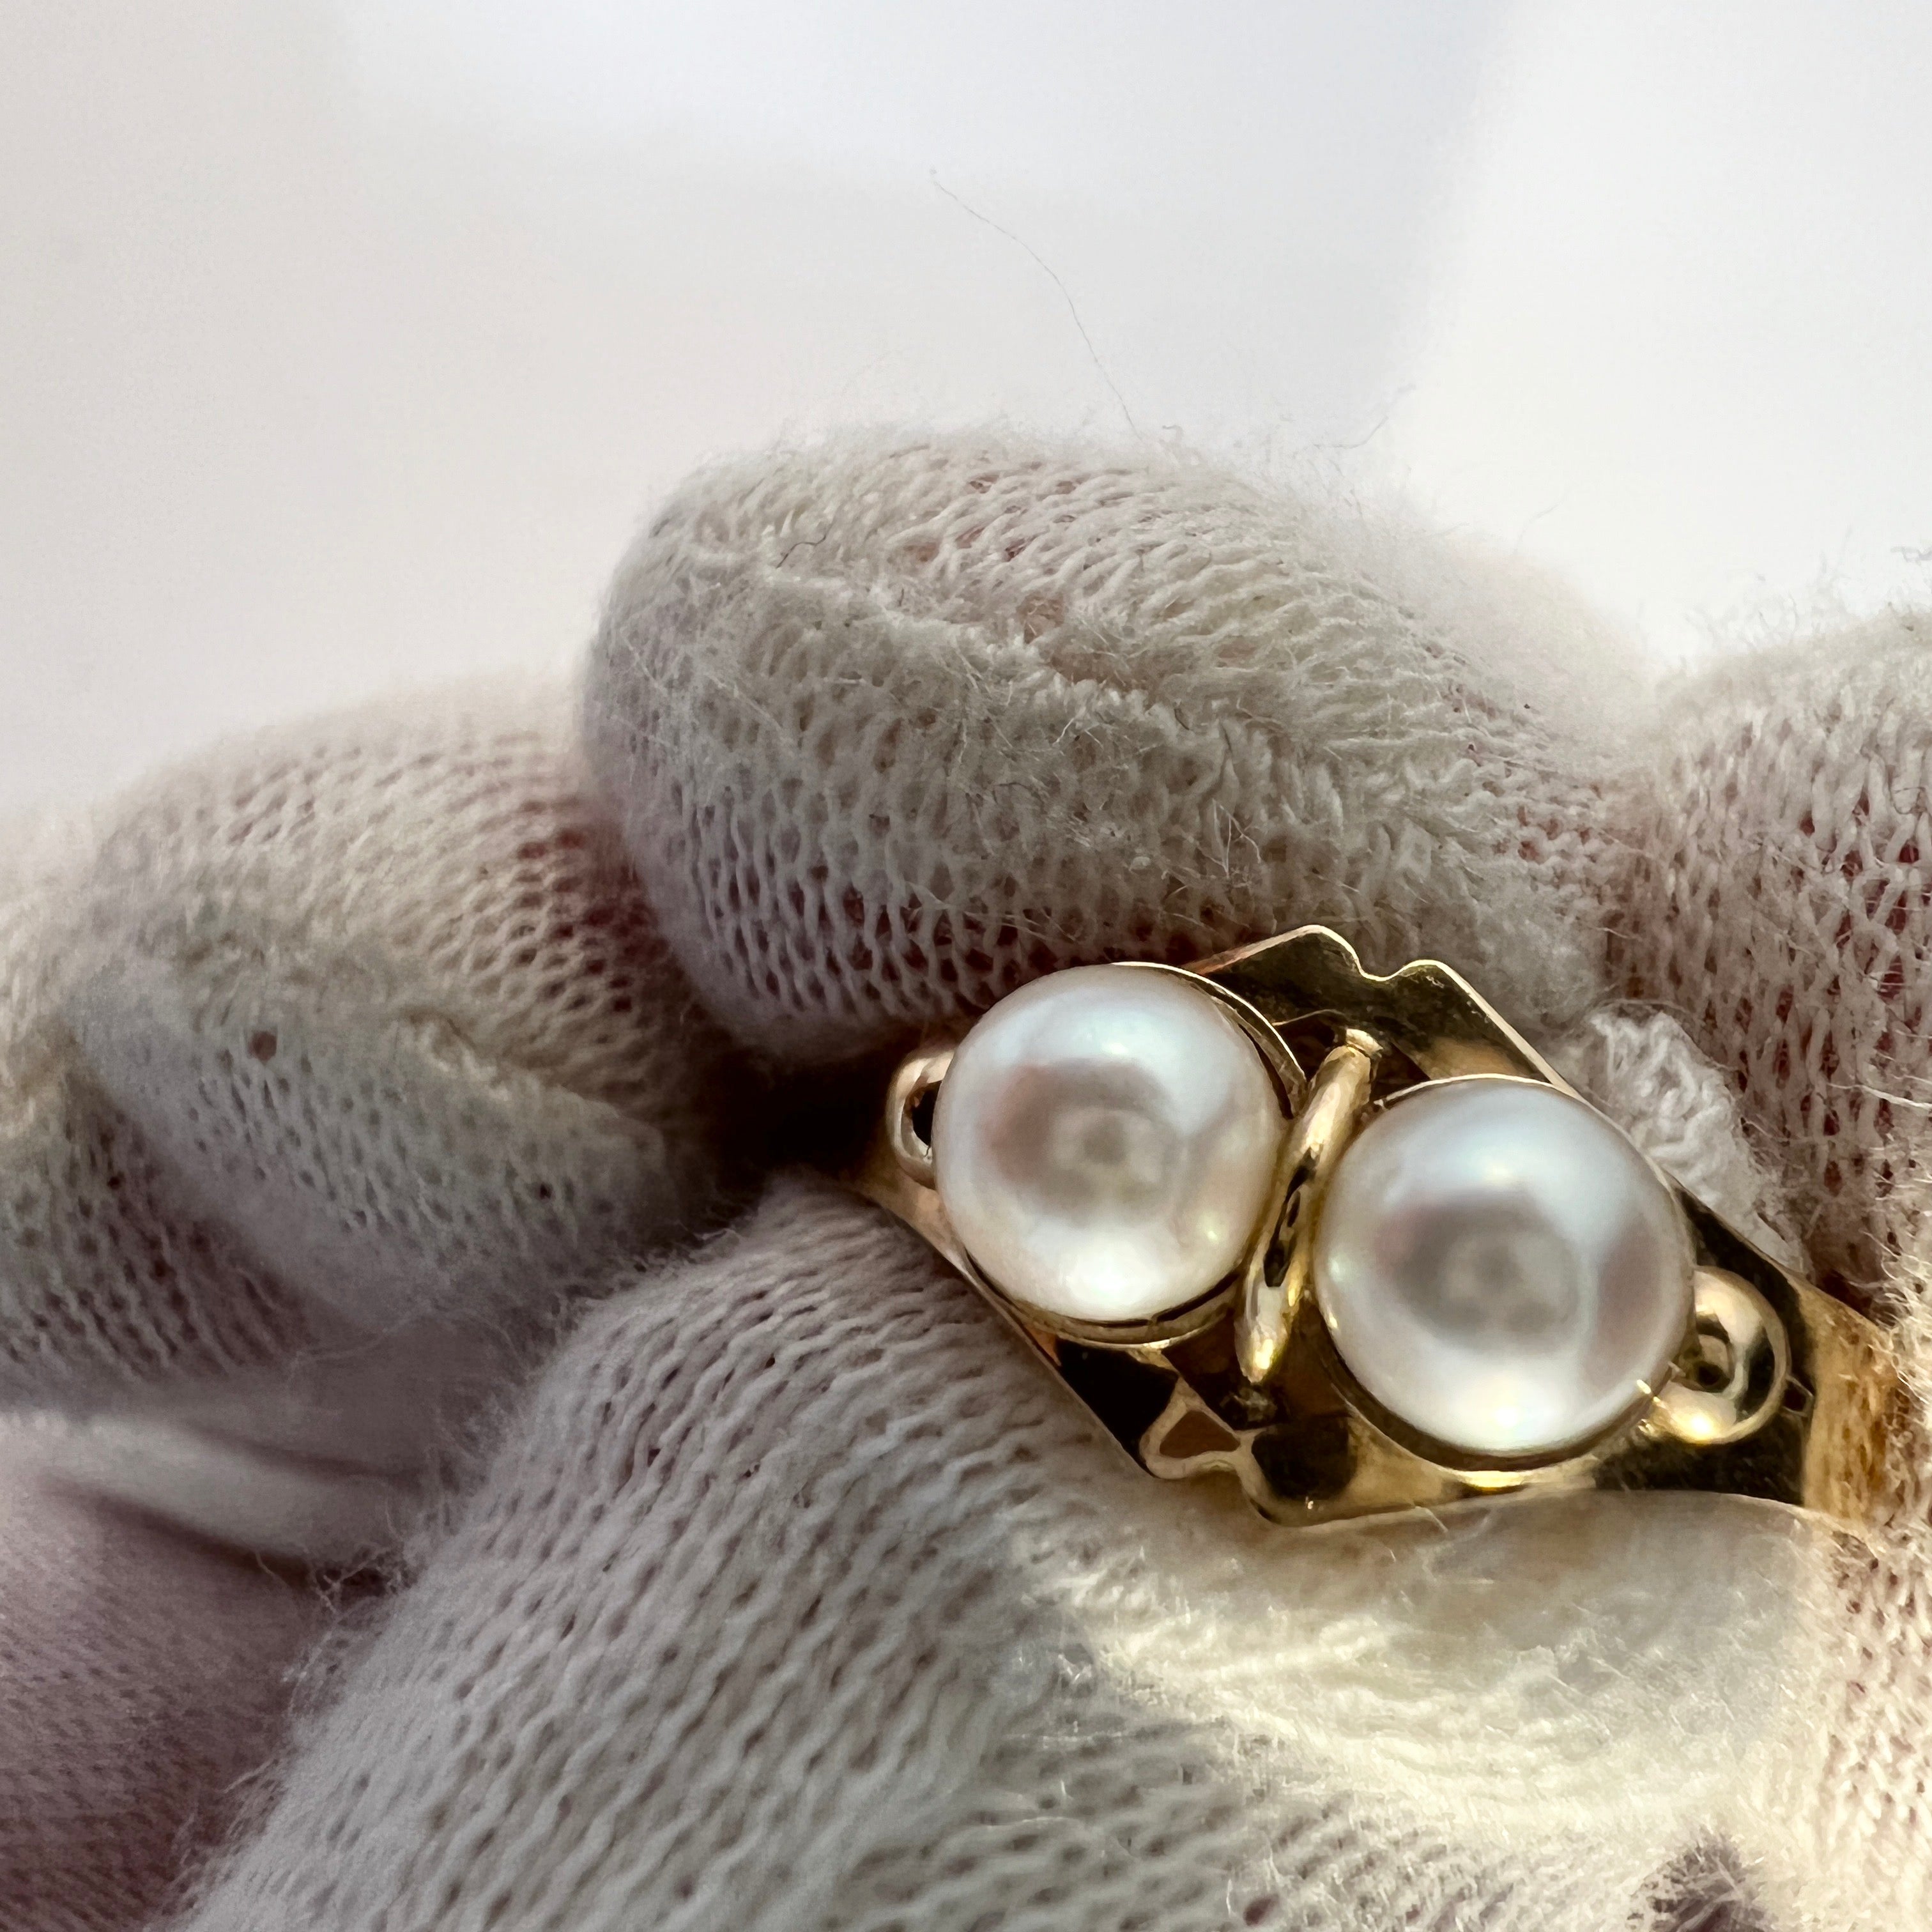 Warsaw Poland Vintage 14k Gold Pearl Ring.